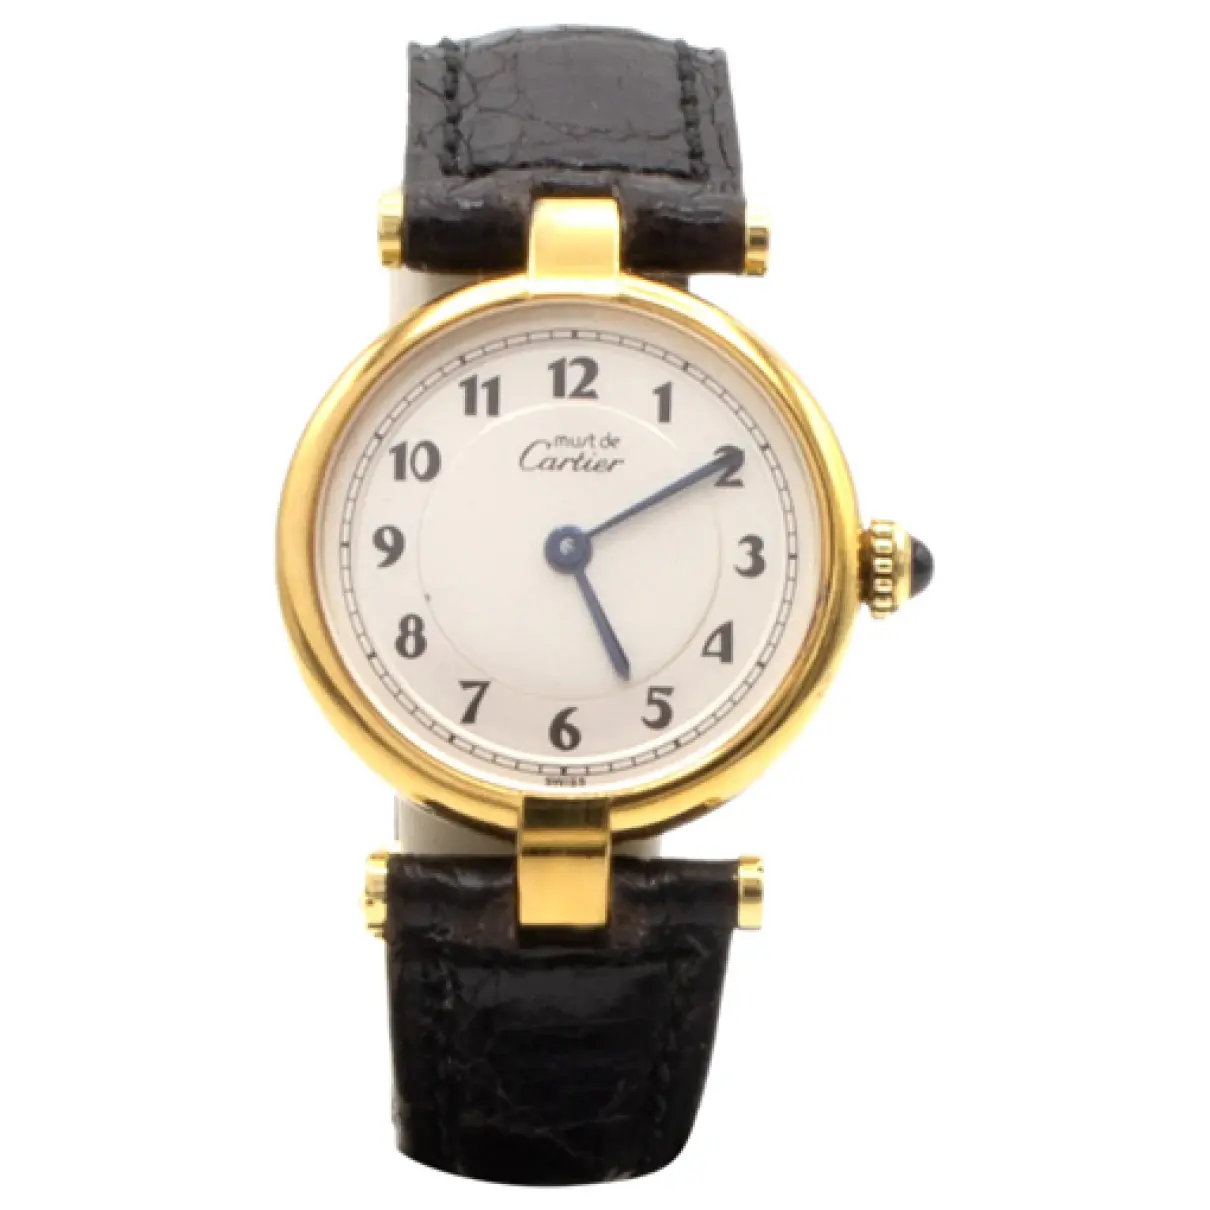 Must Vendôme silver watch